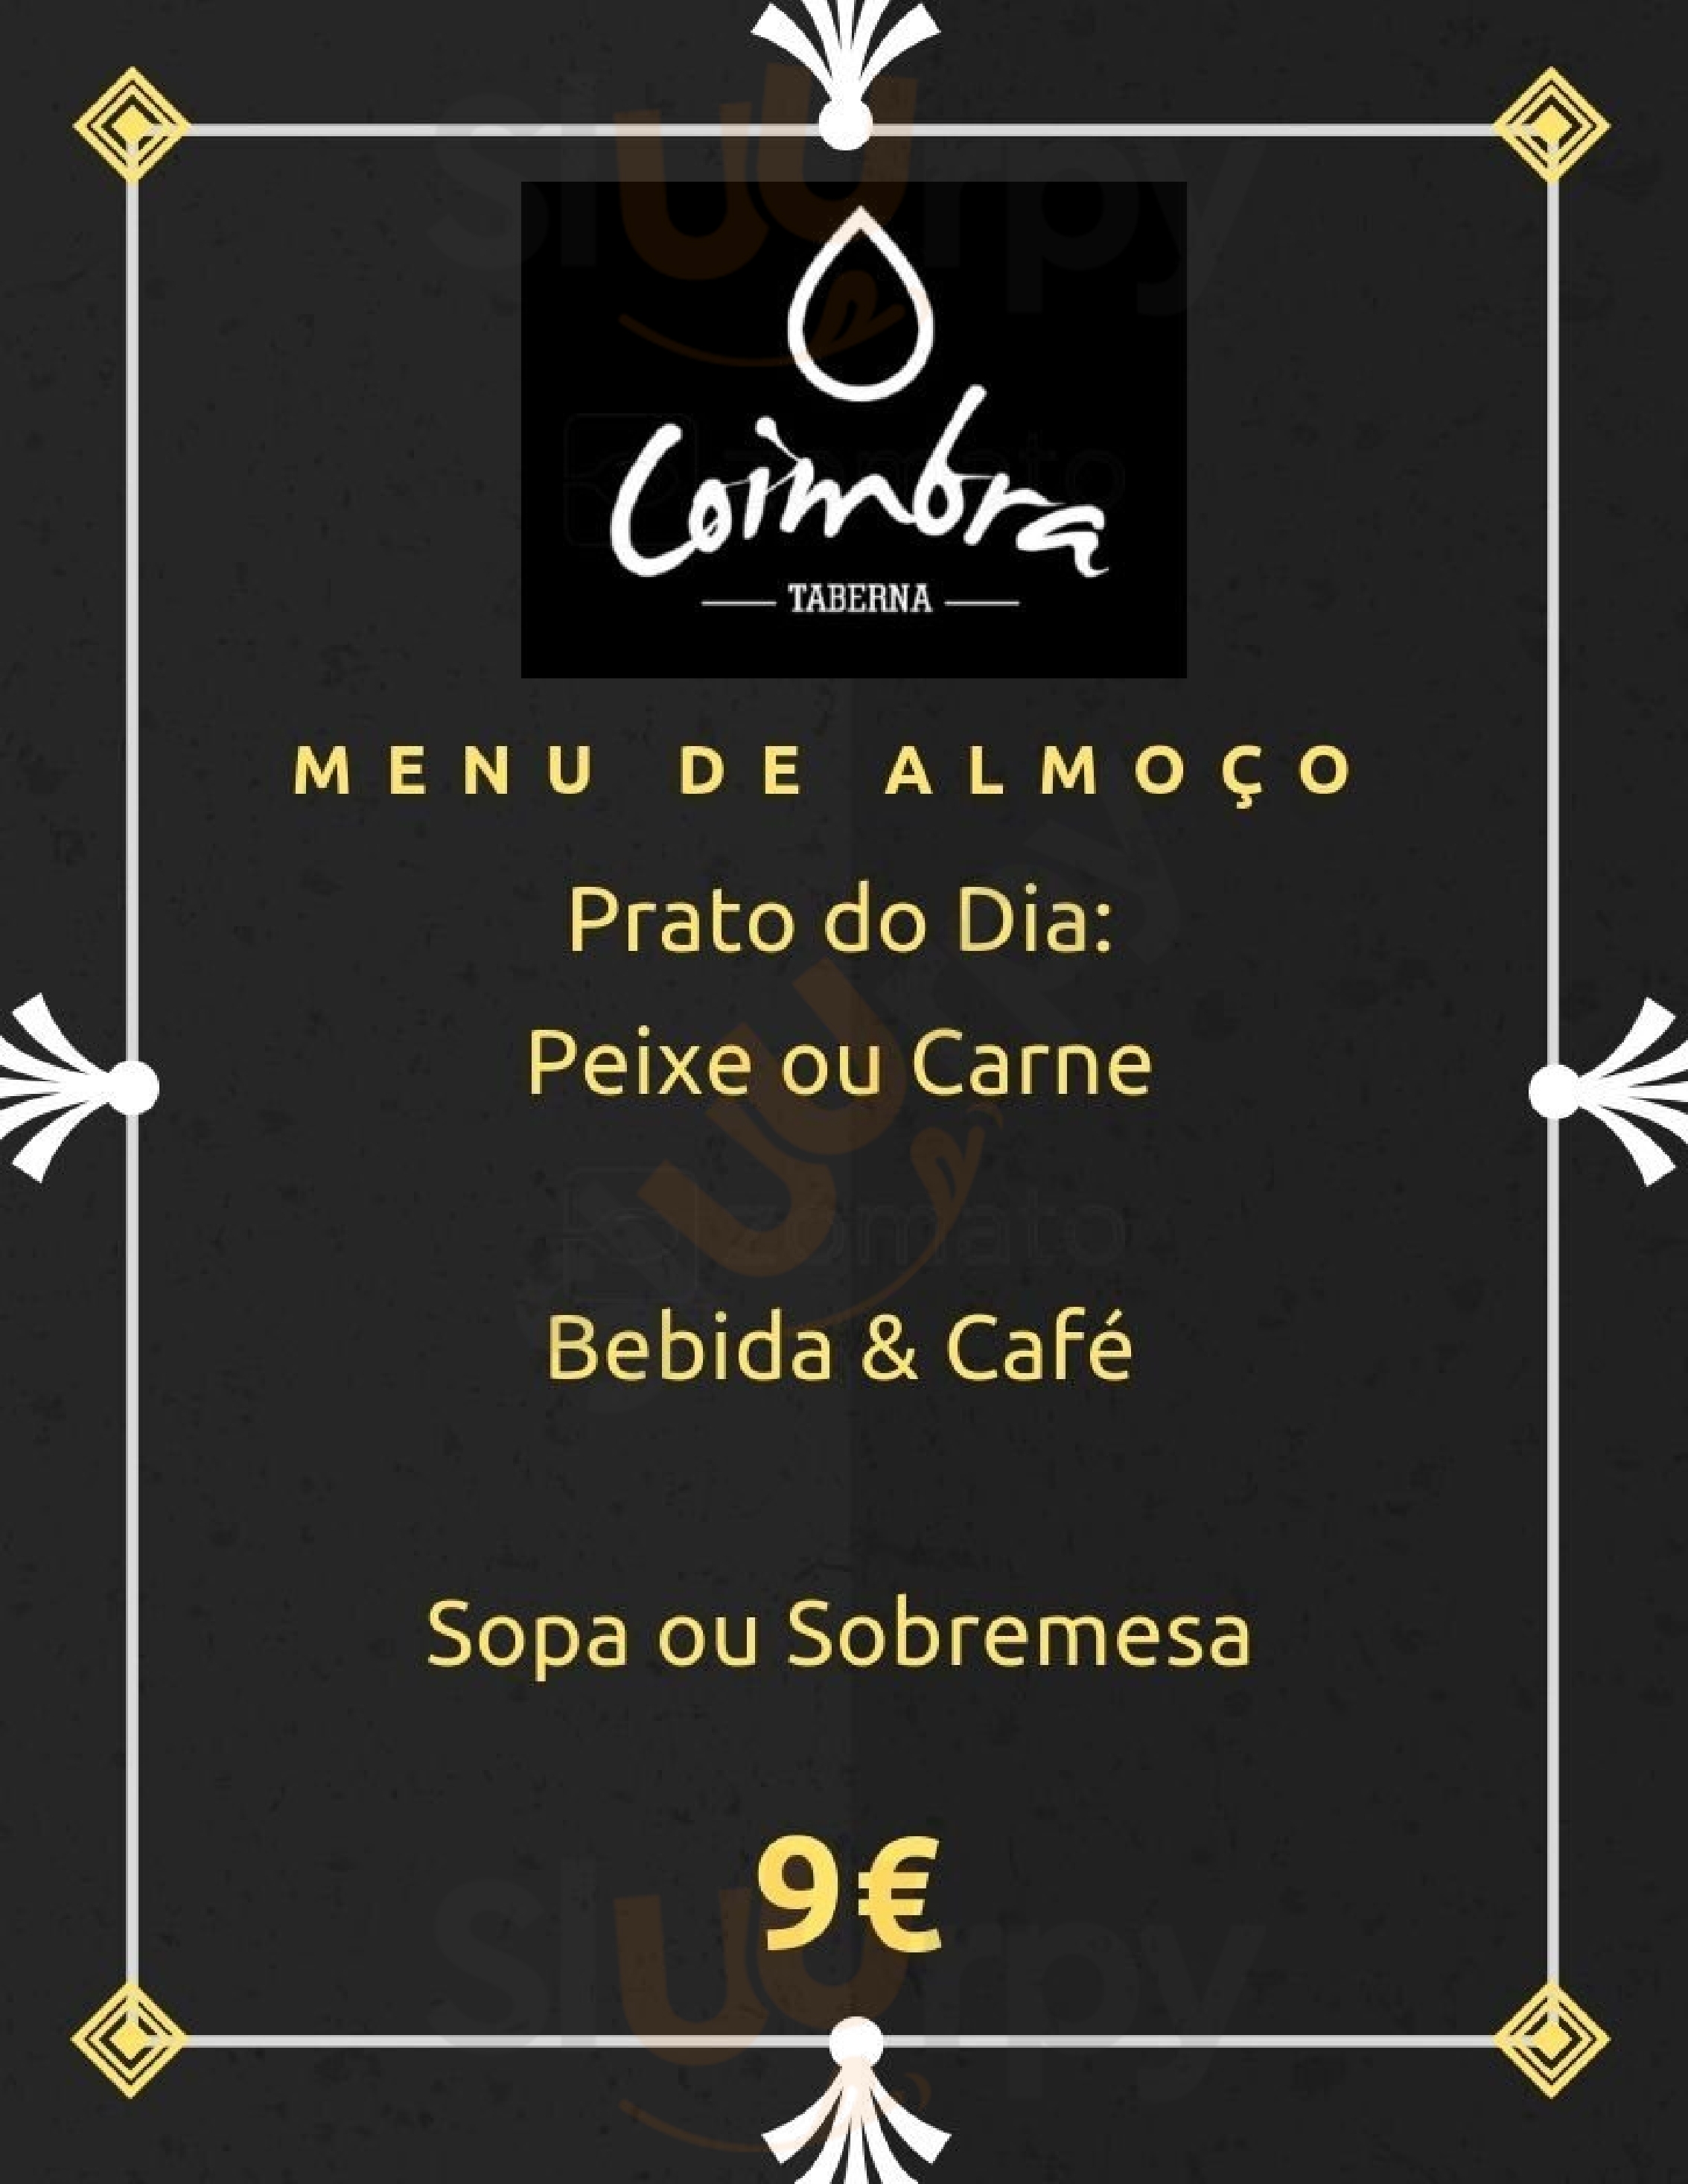 Coimbra Taberna Lisboa Menu - 1